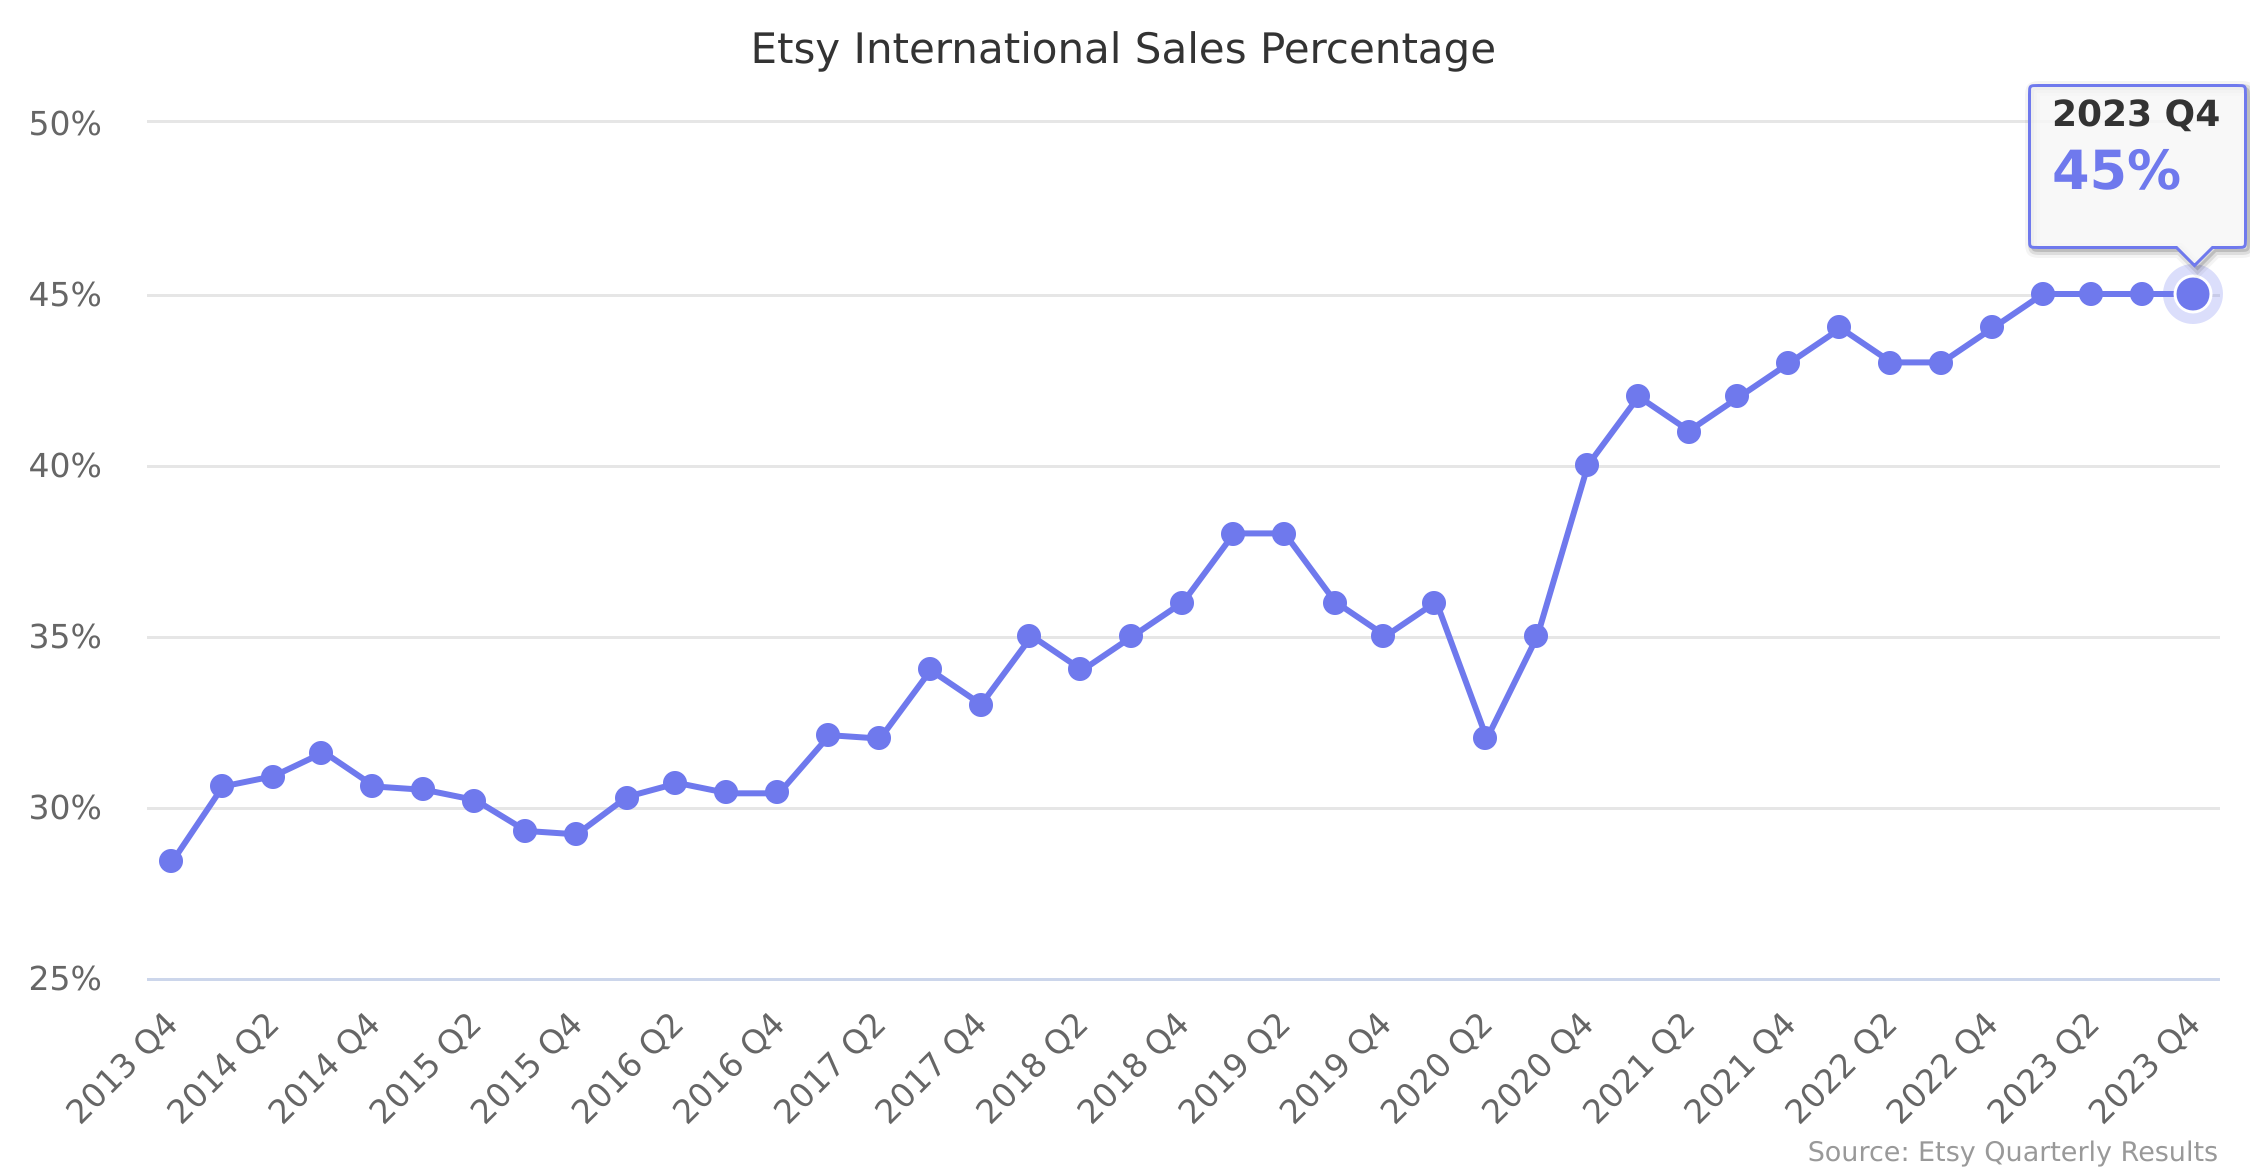 Etsy International Sales Percentage 2013-2022